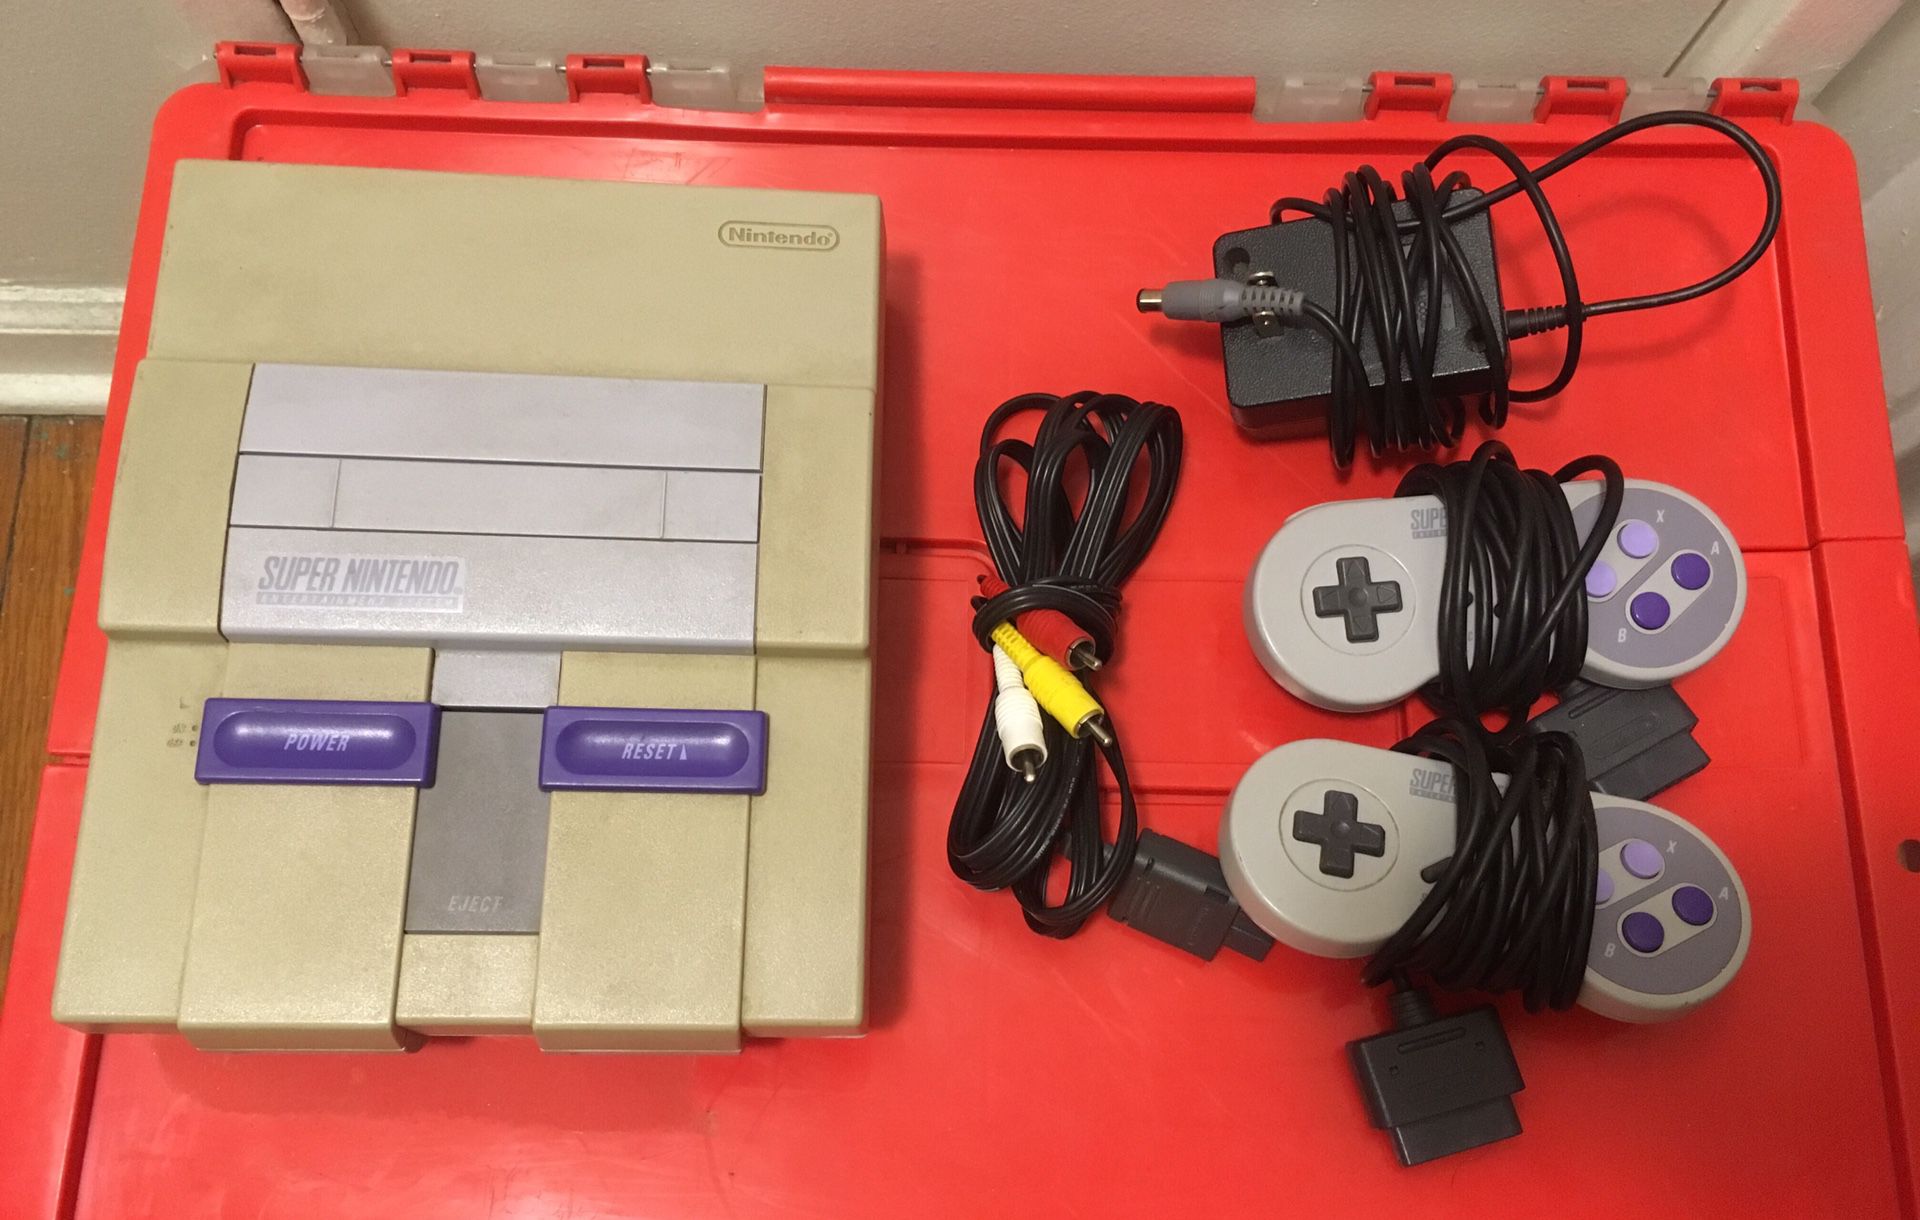 Super Nintendo game system snes complete console 2 controllers classic era